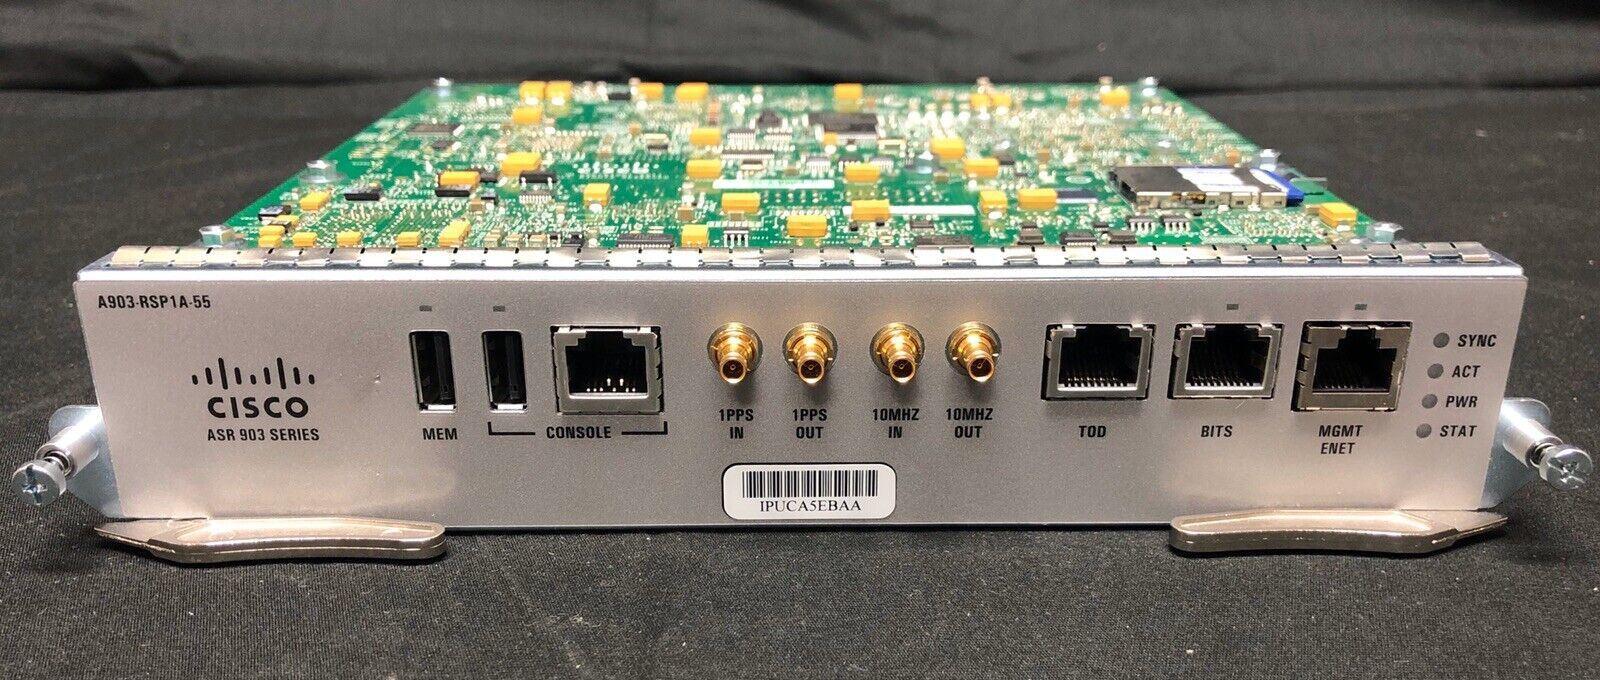 Cisco A903-RSP1A-55  ASR 903 Route Switch Processor